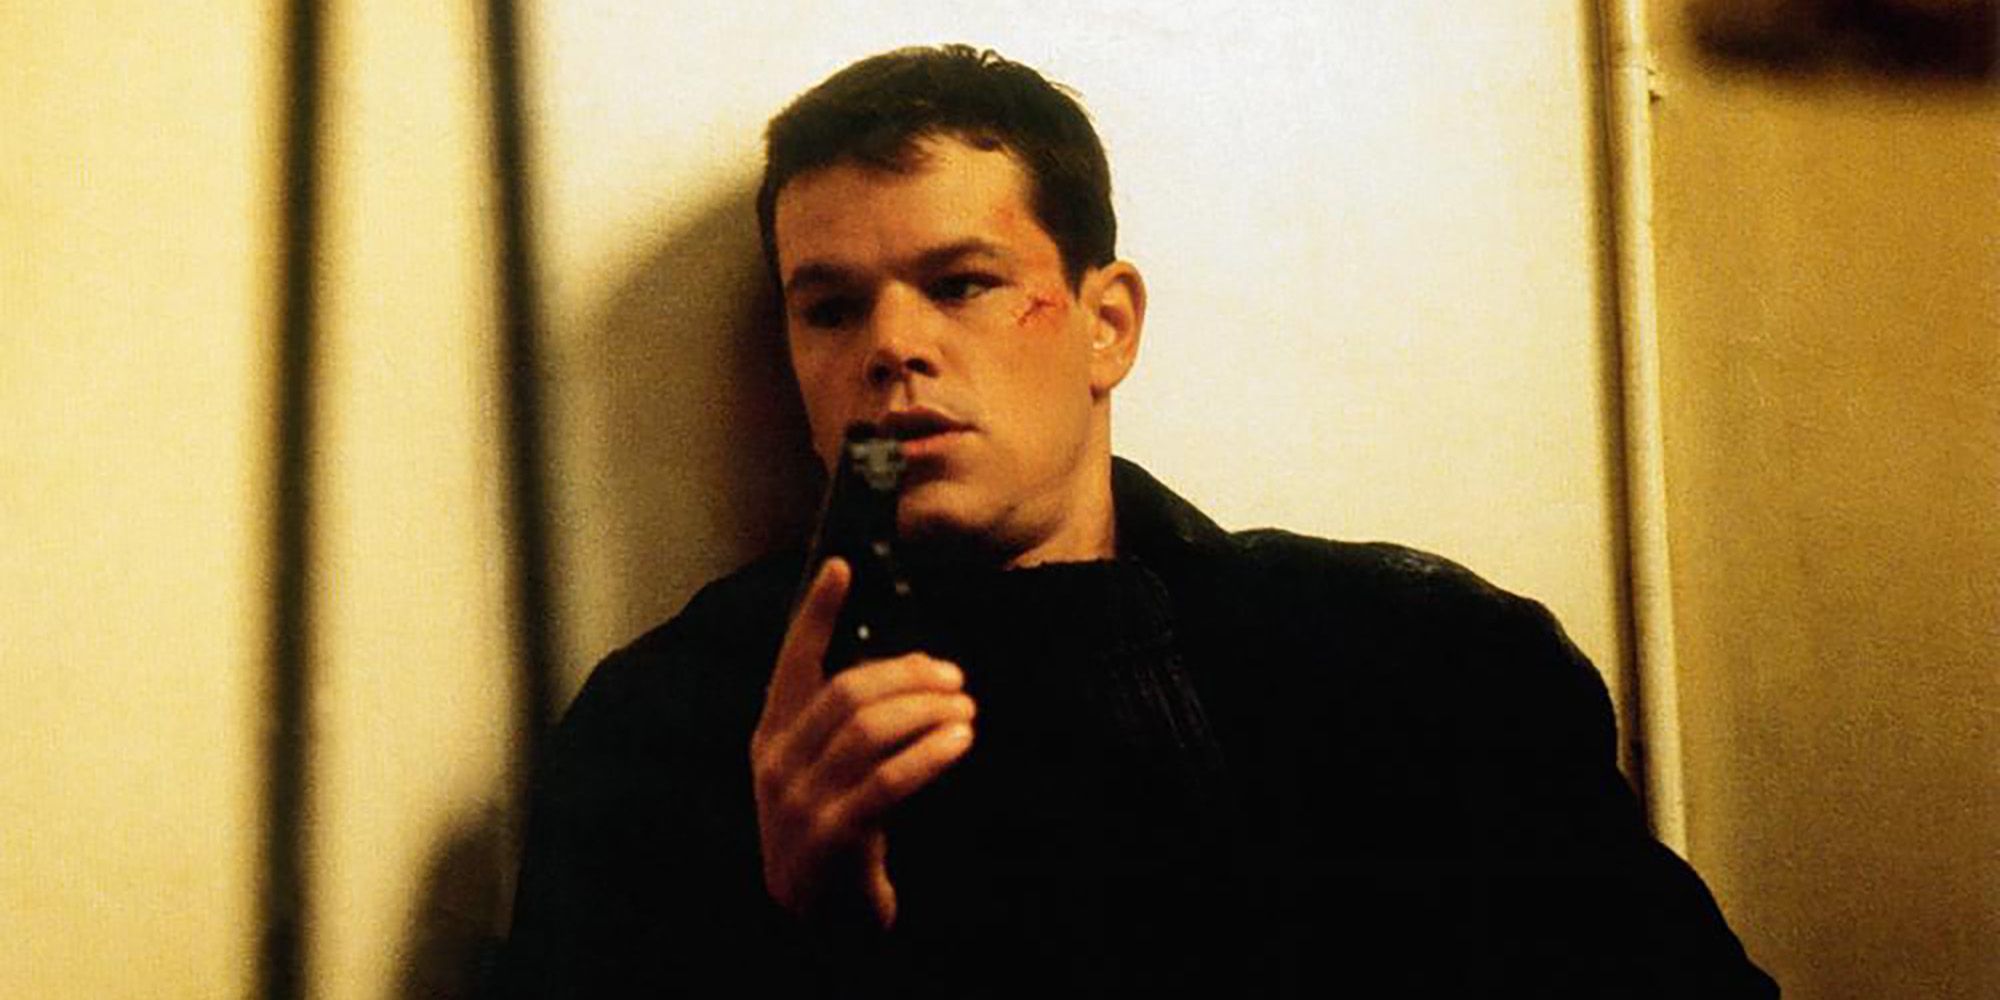 Matt Damon In The Bourne Identity